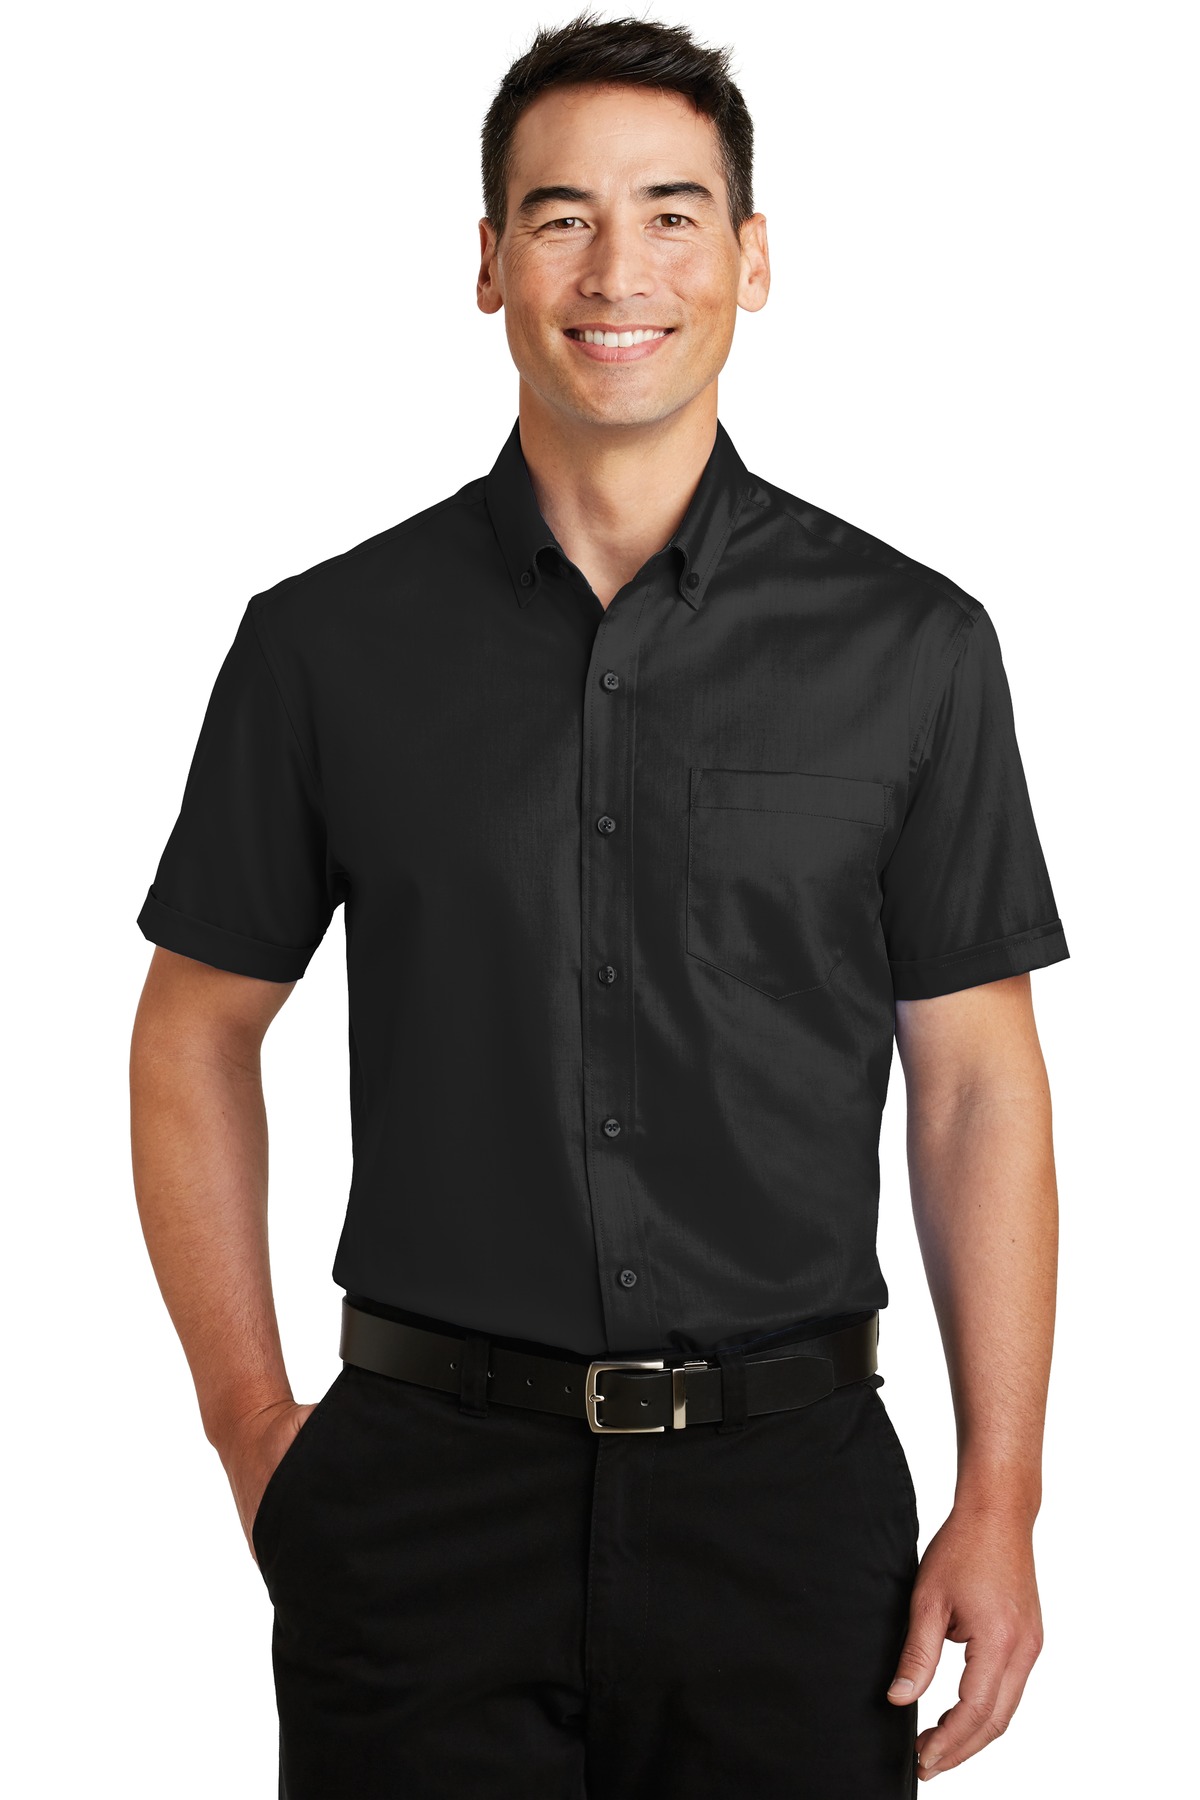 Port Authority Woven Shirts for Hospitality ® Short Sleeve SuperPro Twill Shirt.-Port Authority